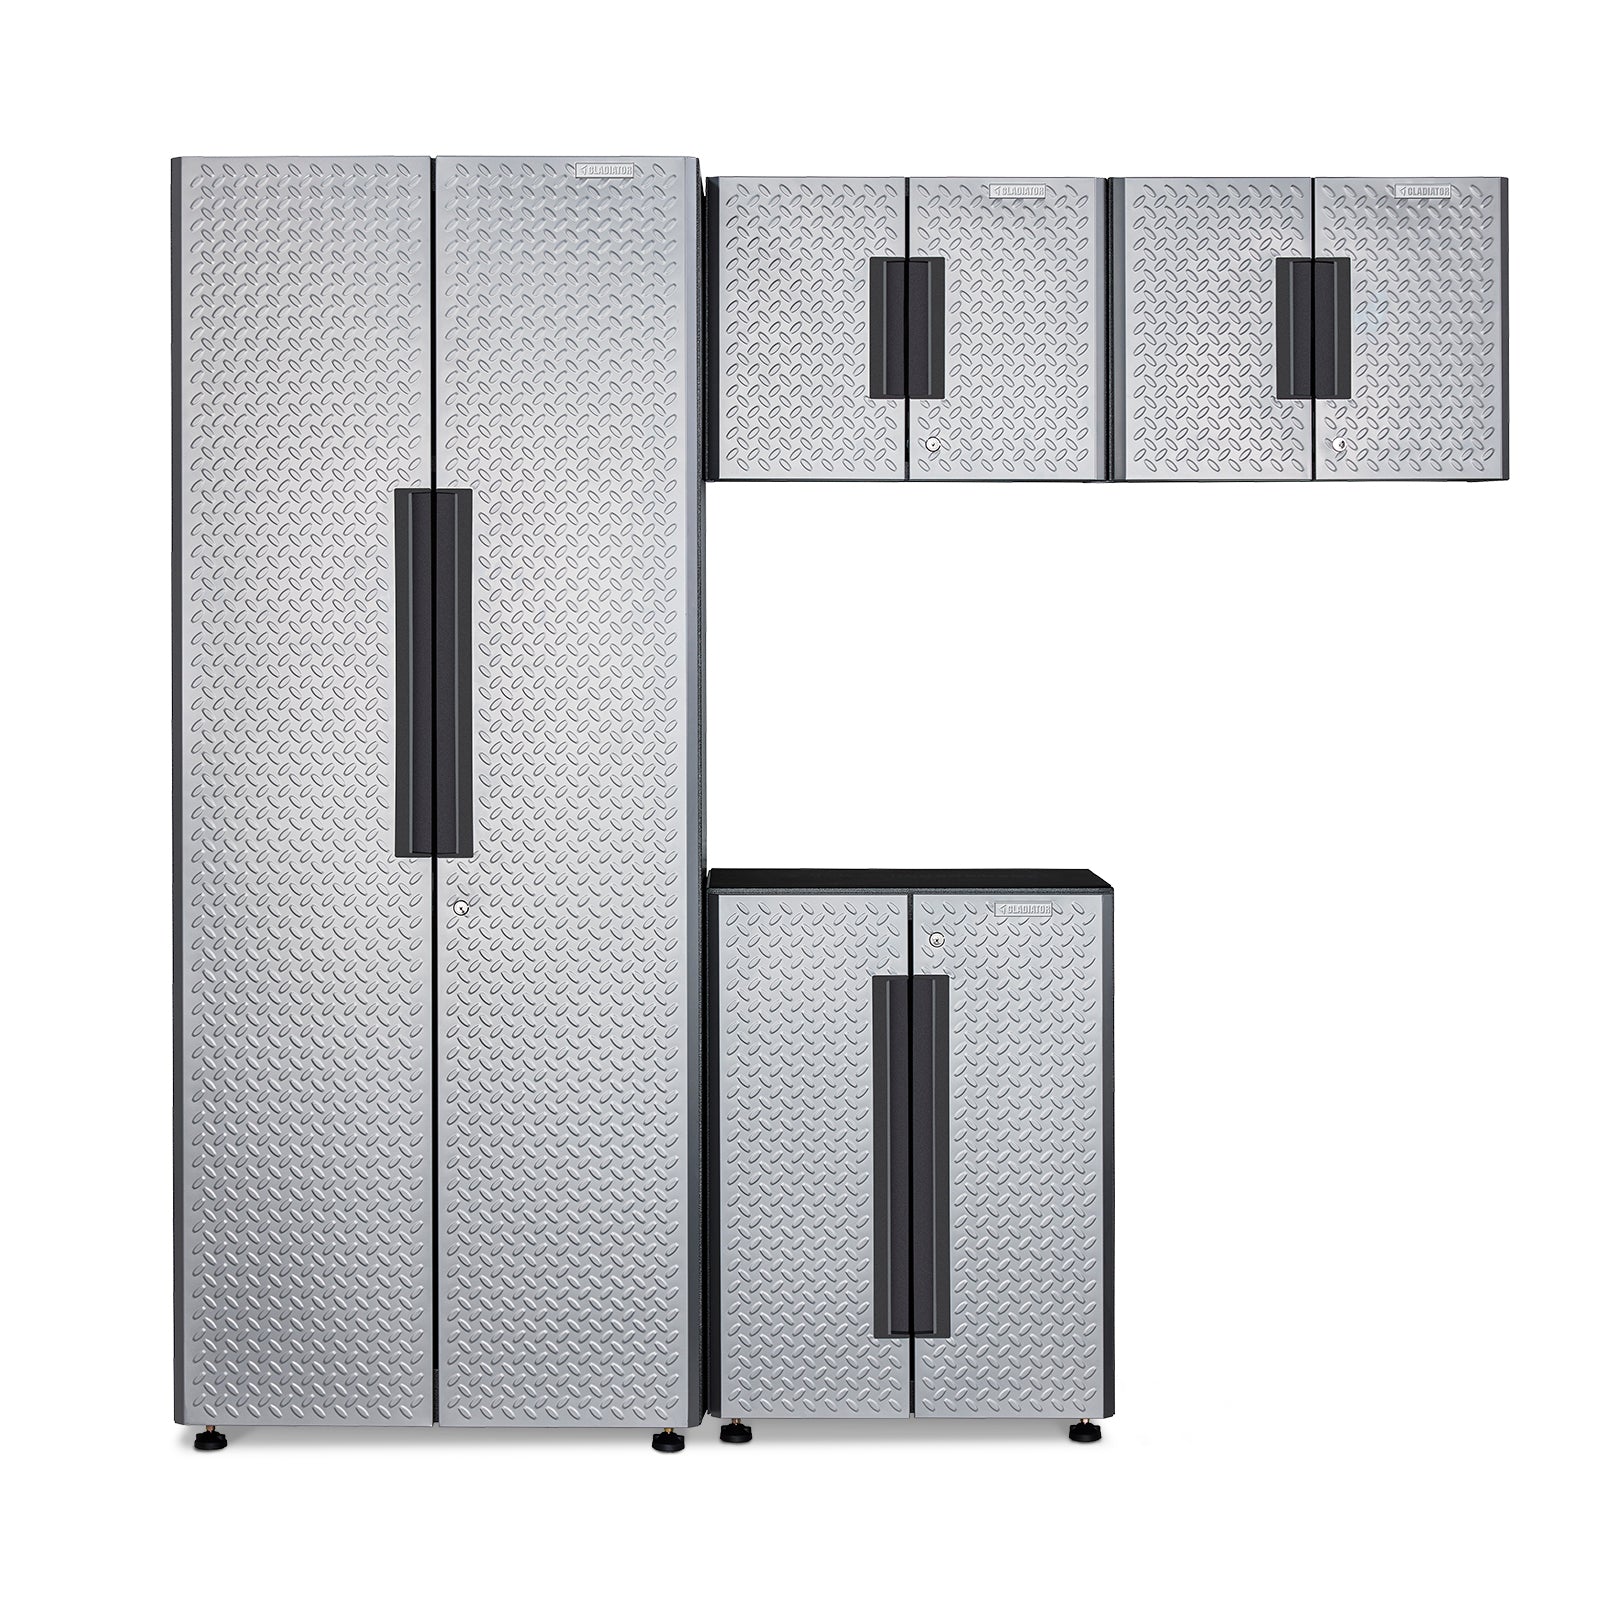 Gladiator® Flex Cabinet System